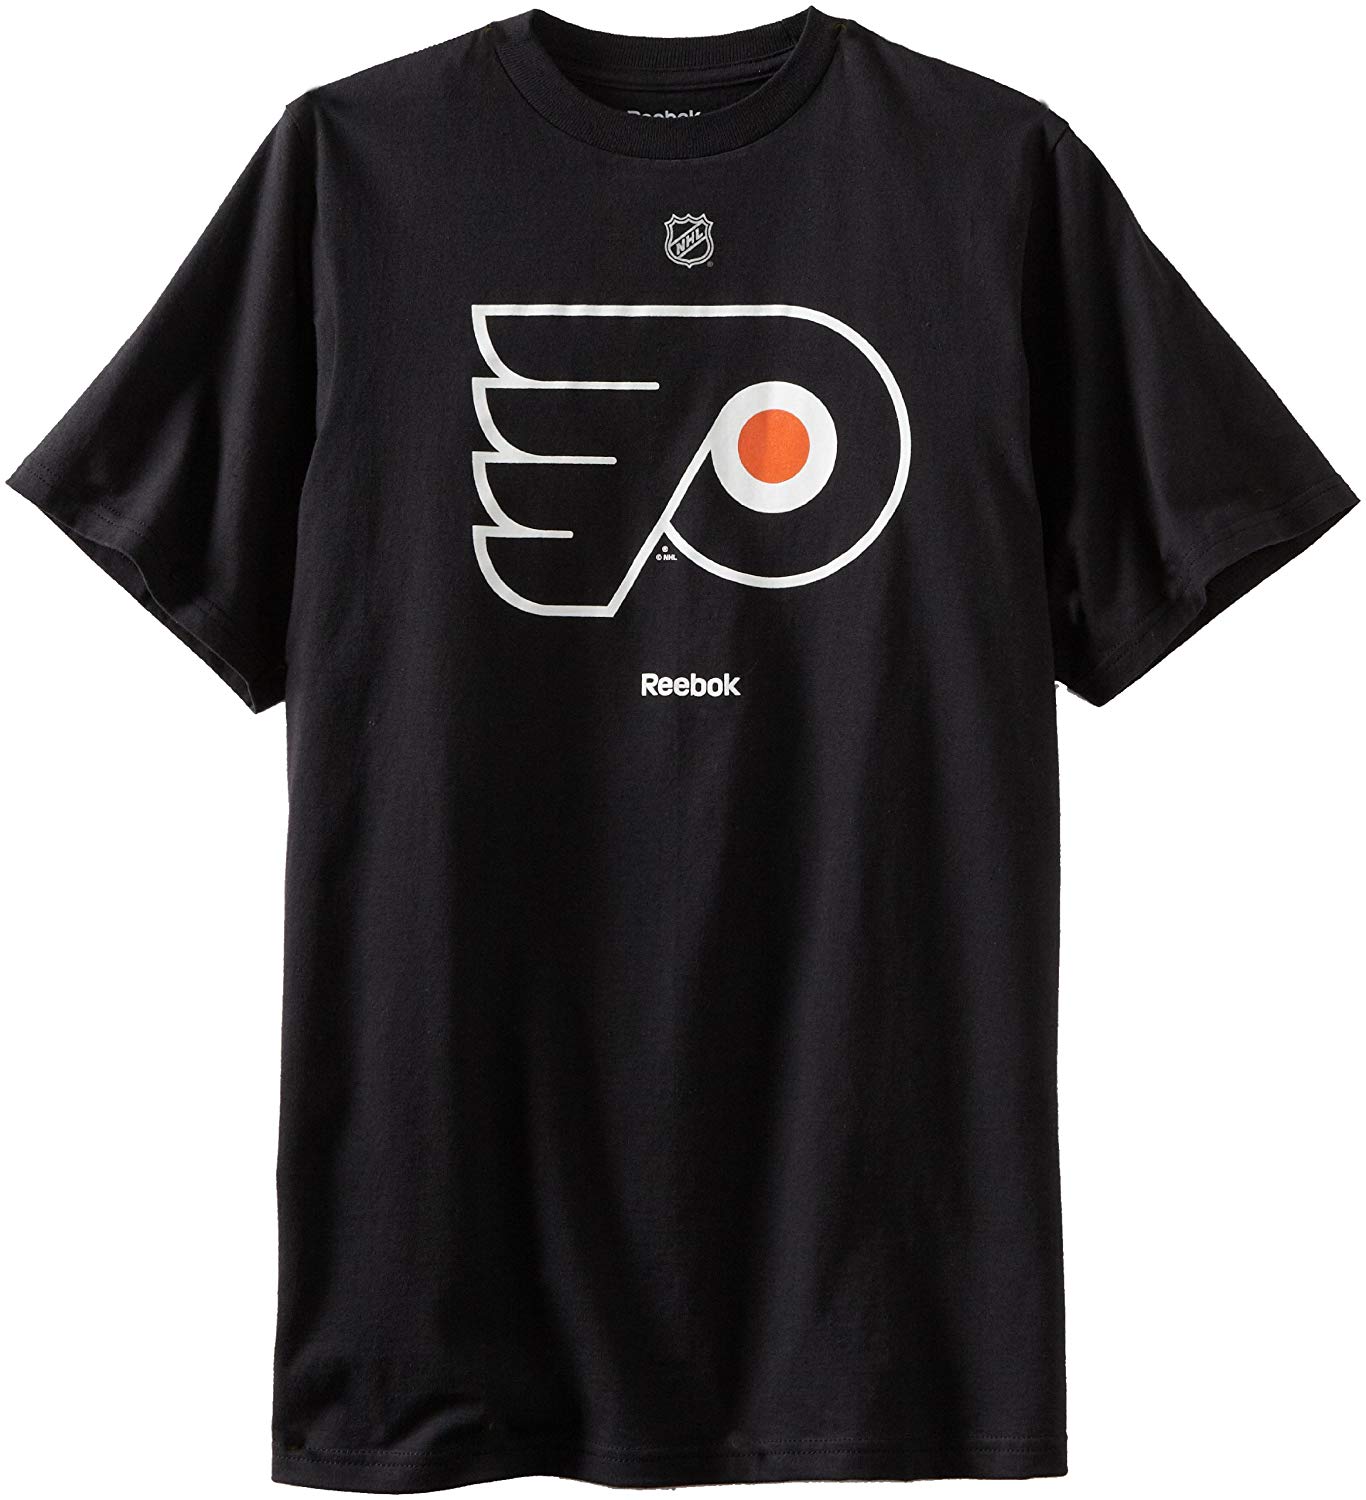 Black Reebok Logo - Amazon.com : NHL Philadelphia Flyers Primary Logo T-Shirt, Small ...